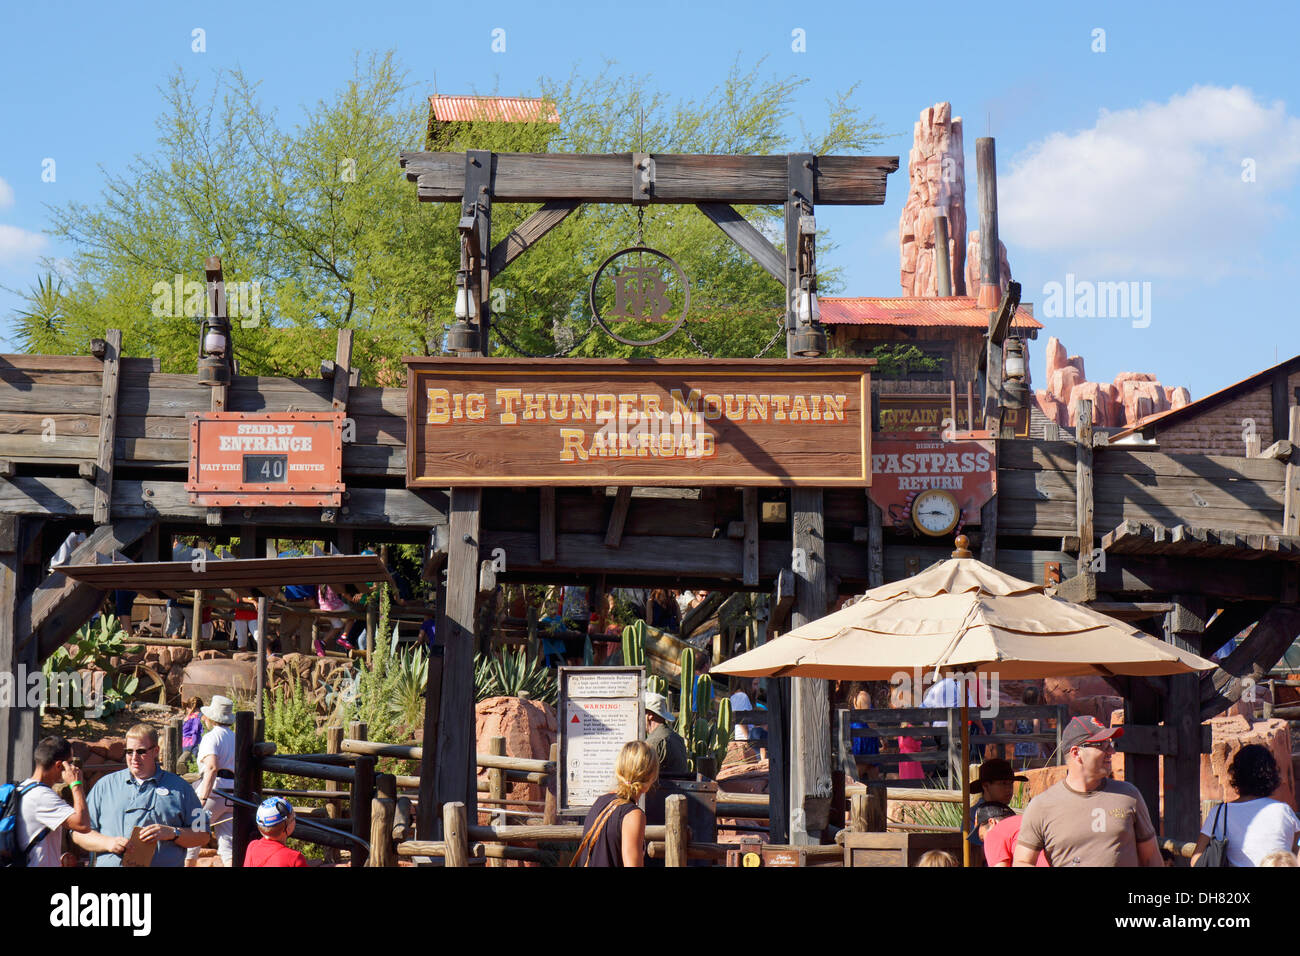 Big Thunder Mountain Railroad Fahrten Achterbahn im Adventureland bei Magic Kingdom, Disneyworld, Orlando, Florida Stockfoto